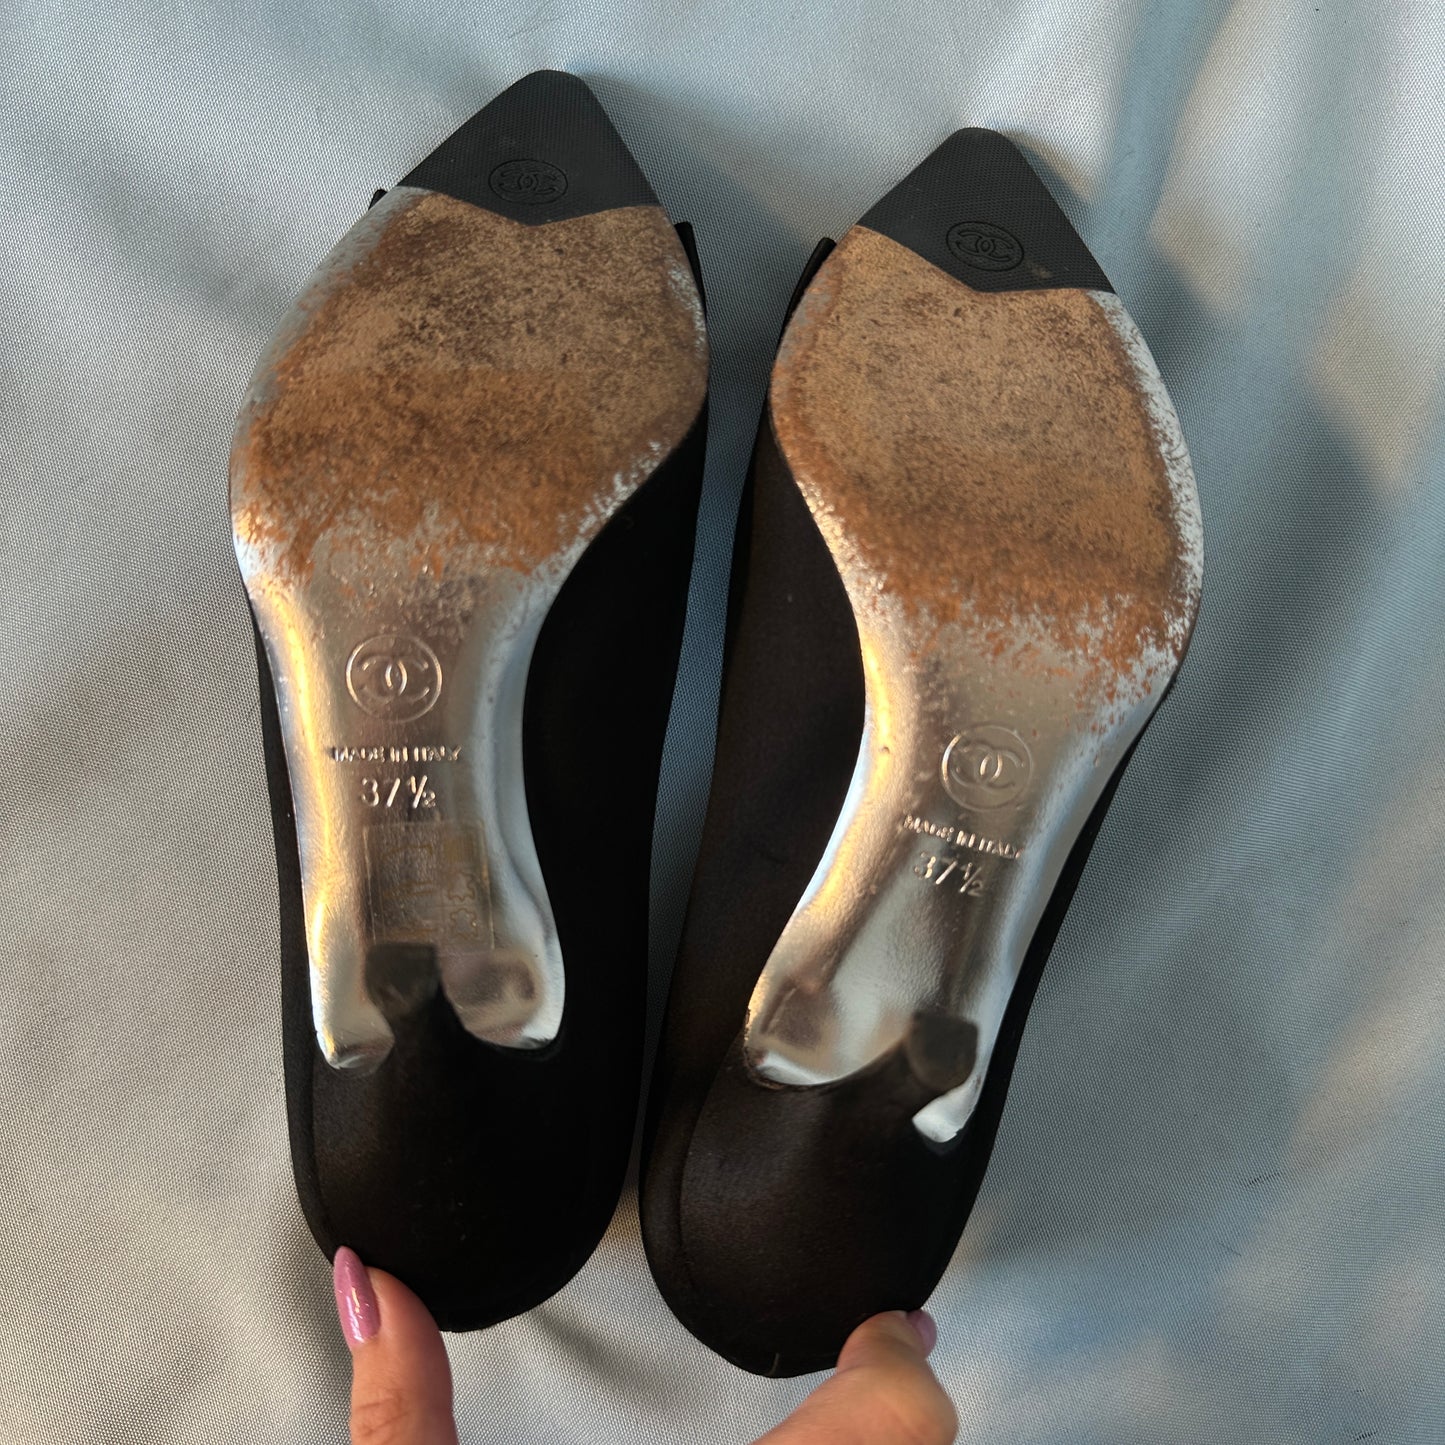 Chanel Crystal Black Satin Pointed Toe Heels